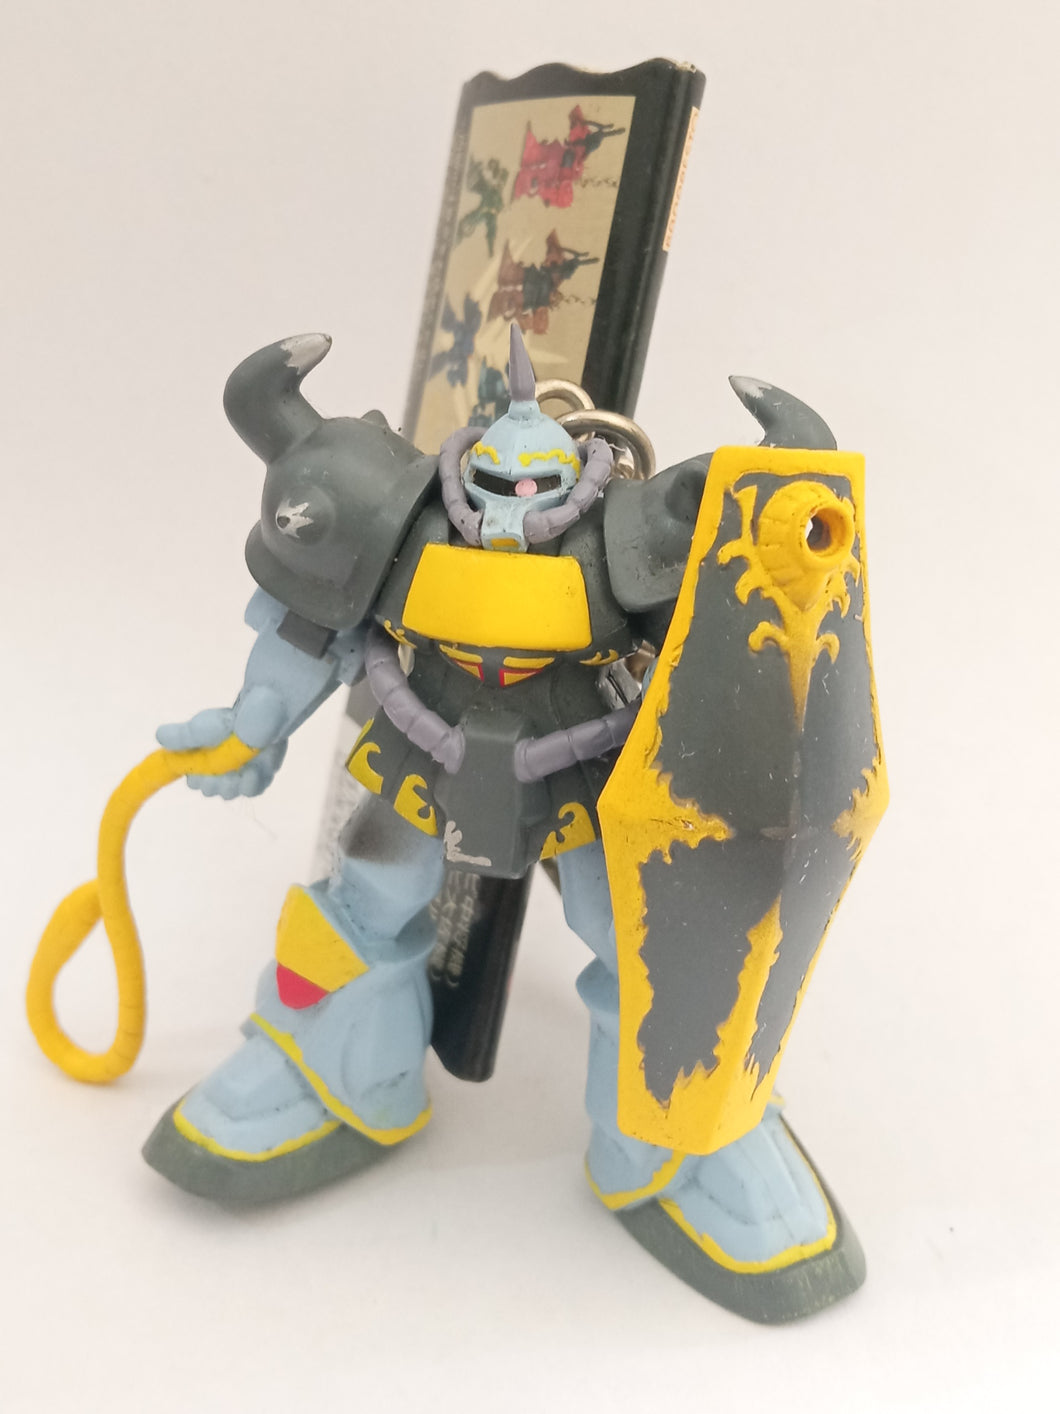 Mobile Suit Gundam HQ Figure Keychain Mascot Key Holder Strap